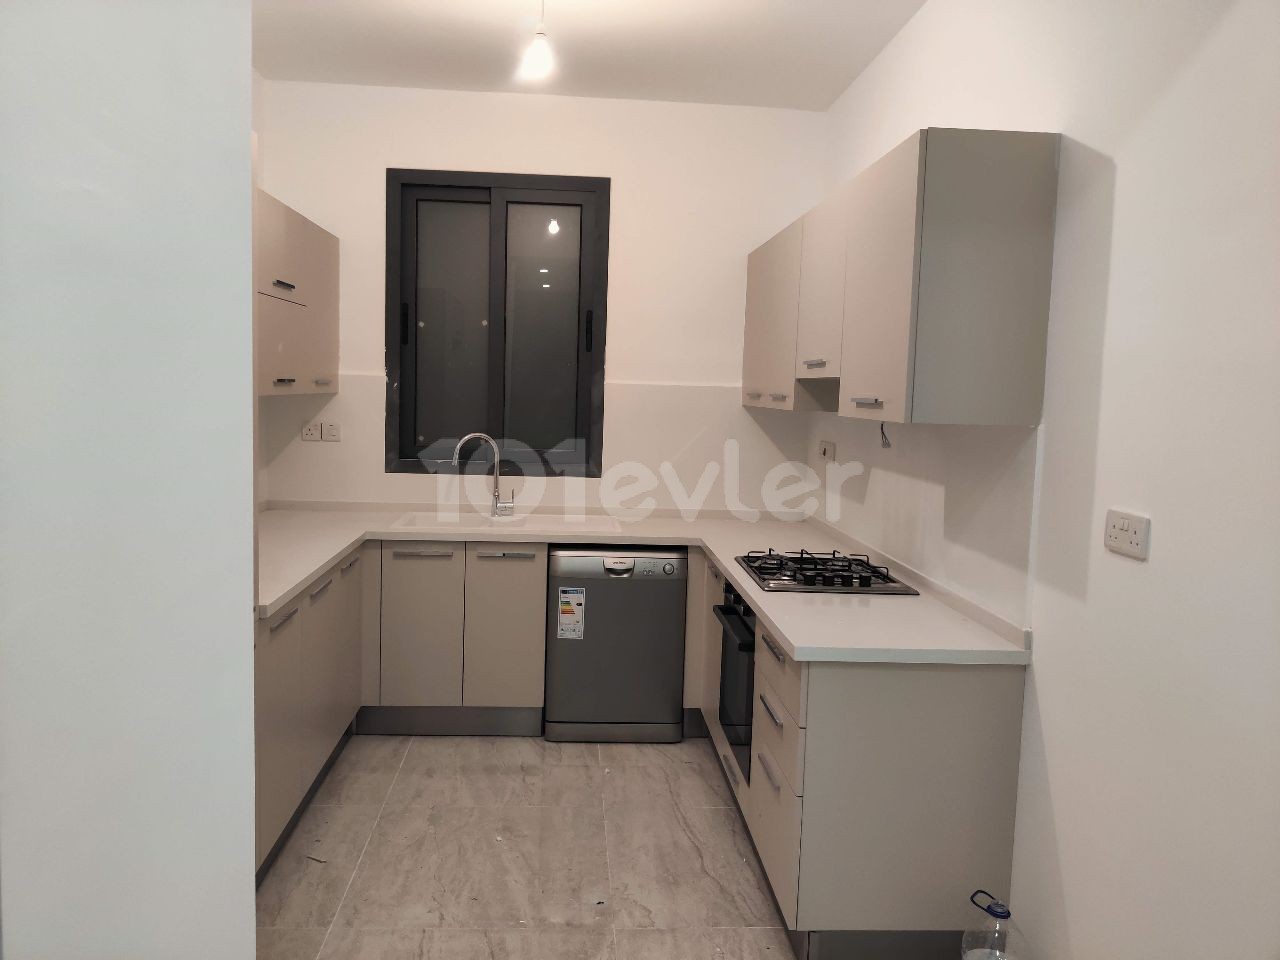 Güzelyurt Kalkanlı 2+1 flat for rent is in the hands of the site official